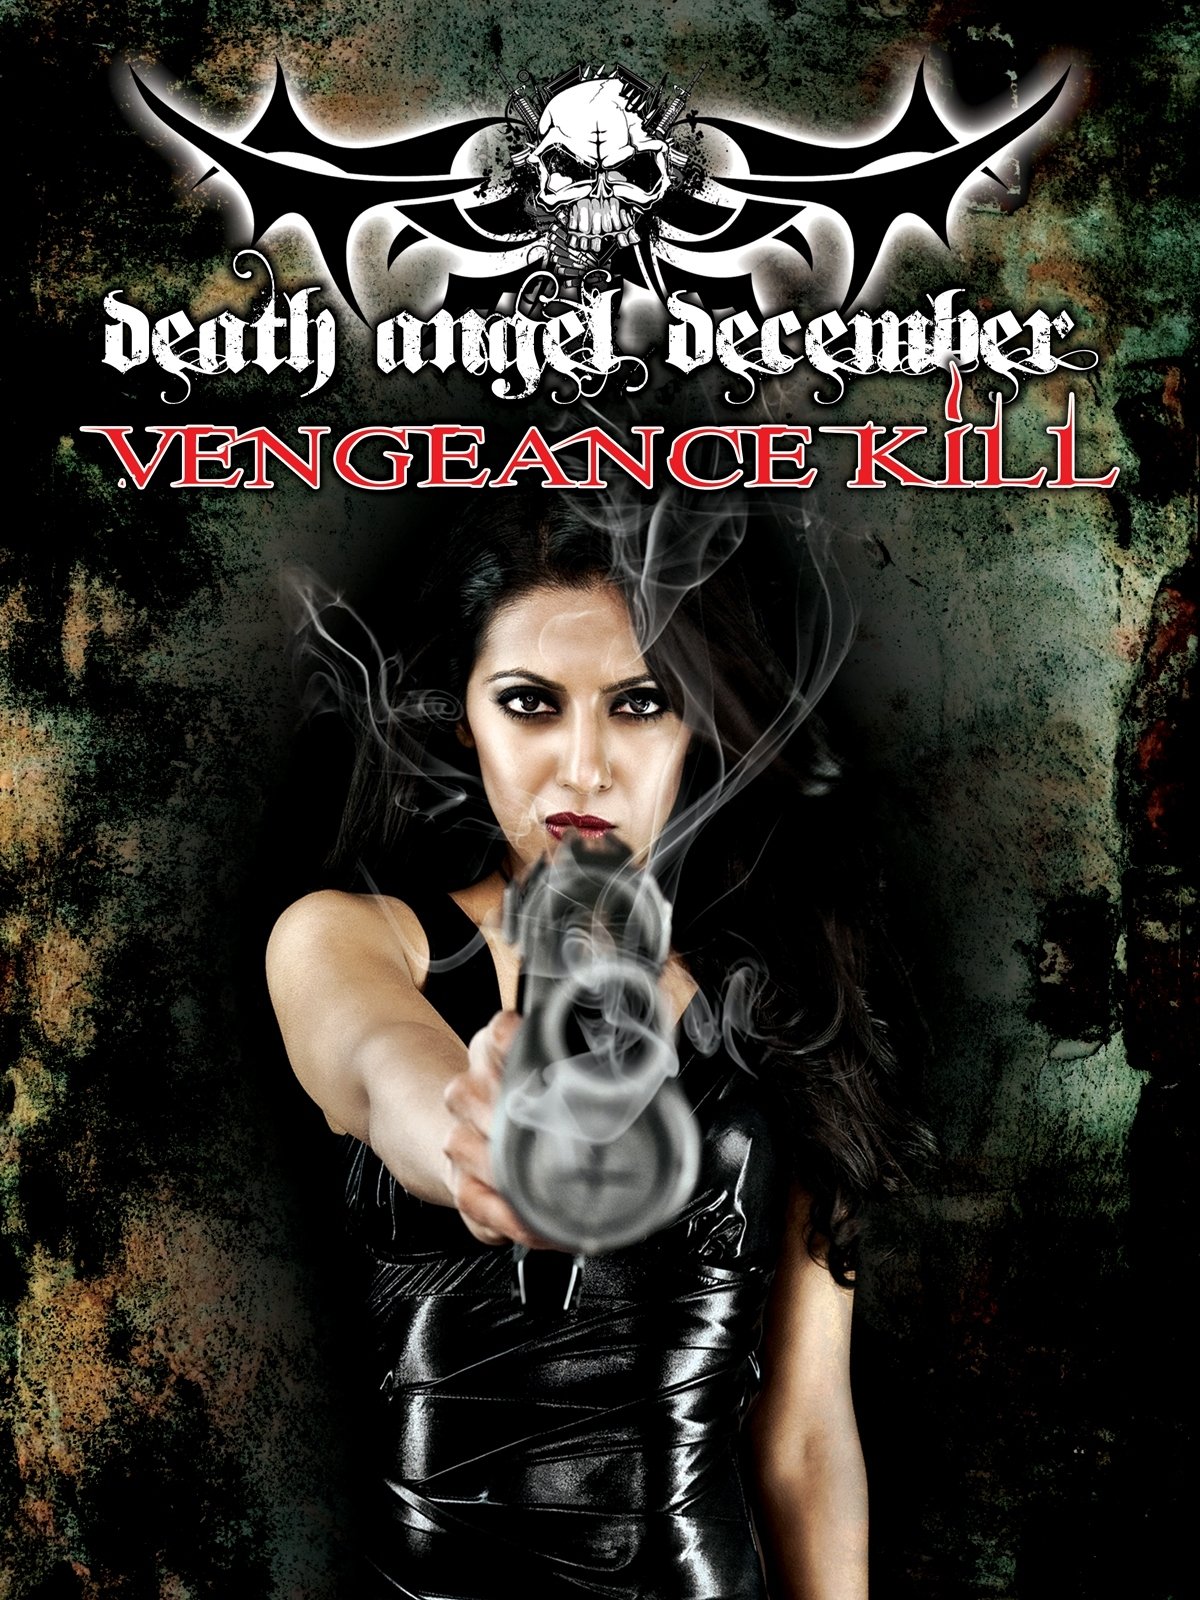 Фото - Death Angel December: Vengeance Kill: 1200x1600 / 452 Кб